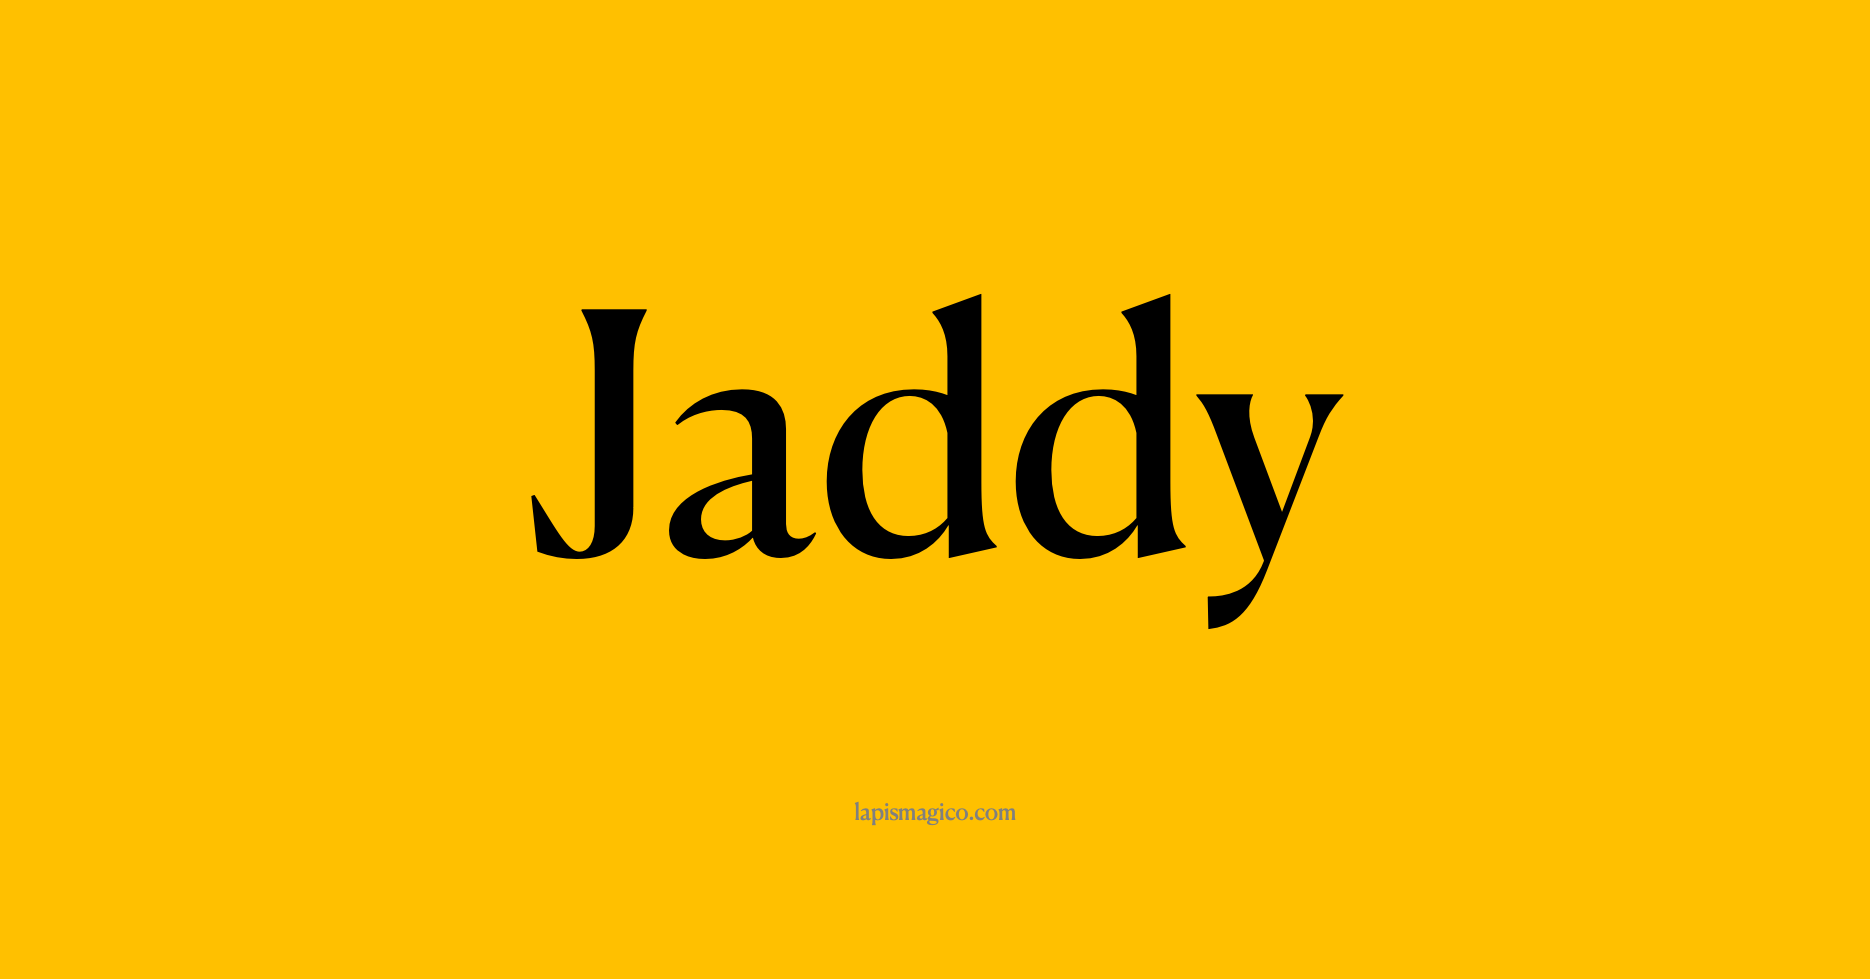 Nome Jaddy